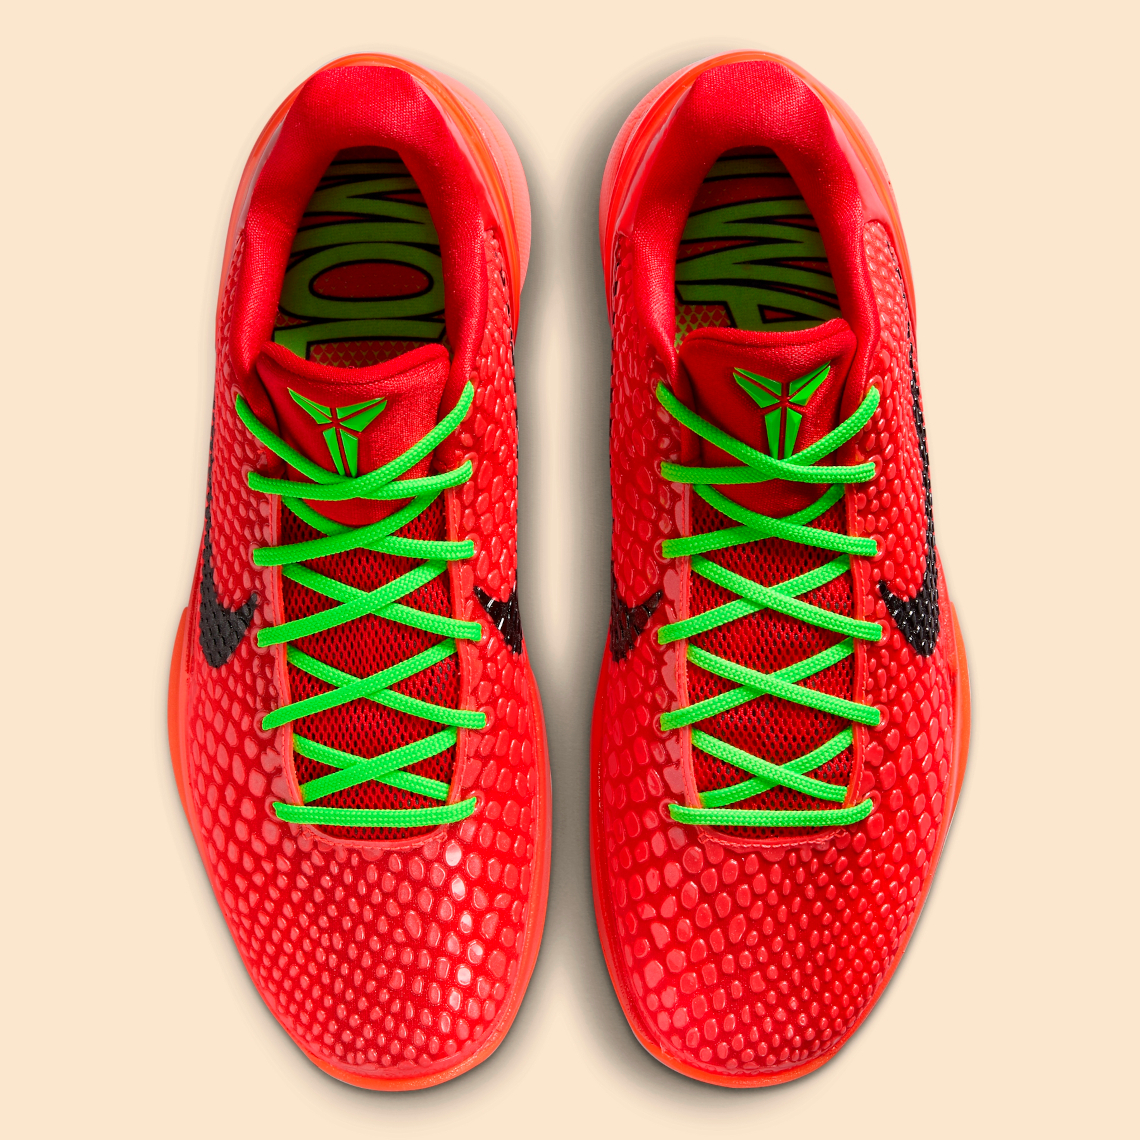 Nike nike air jordan white and red chucks boots shoes Fv4921 600 08